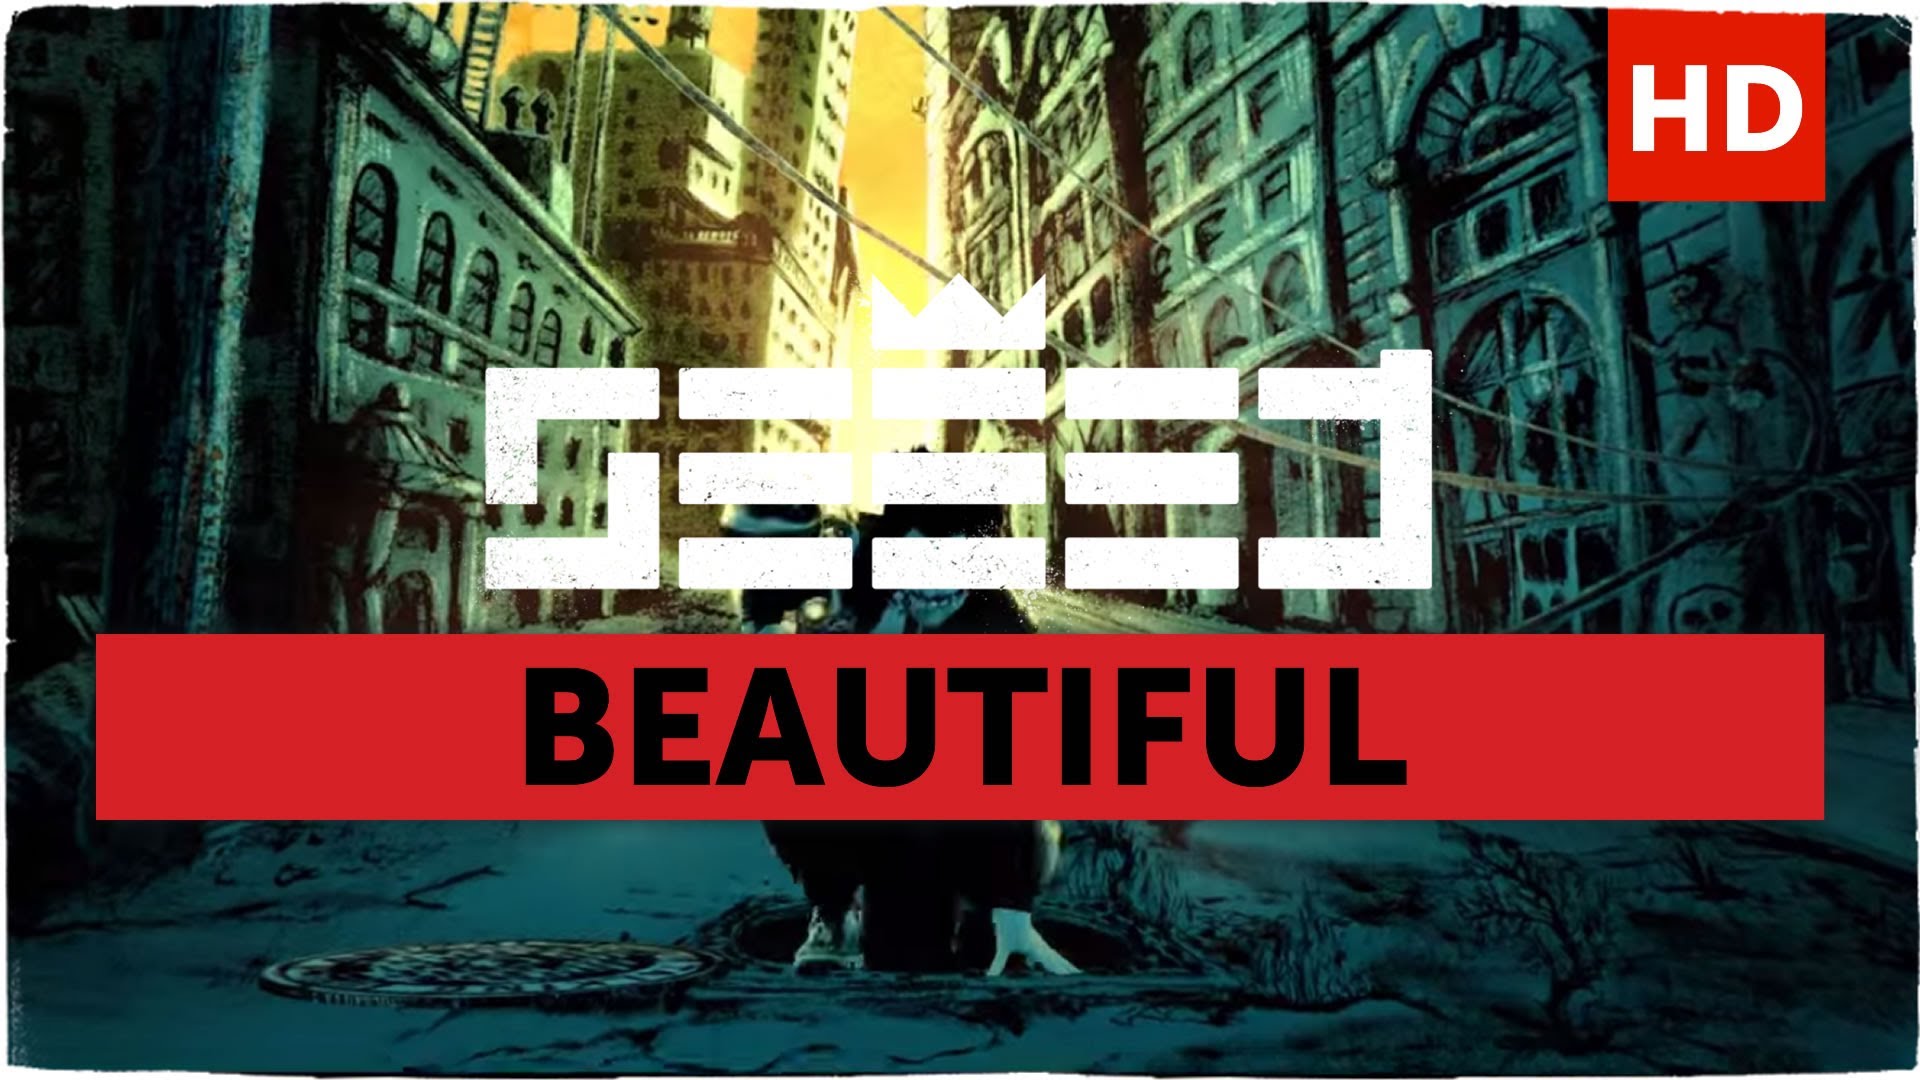 Seeed - Beautiful [8/31/2012]